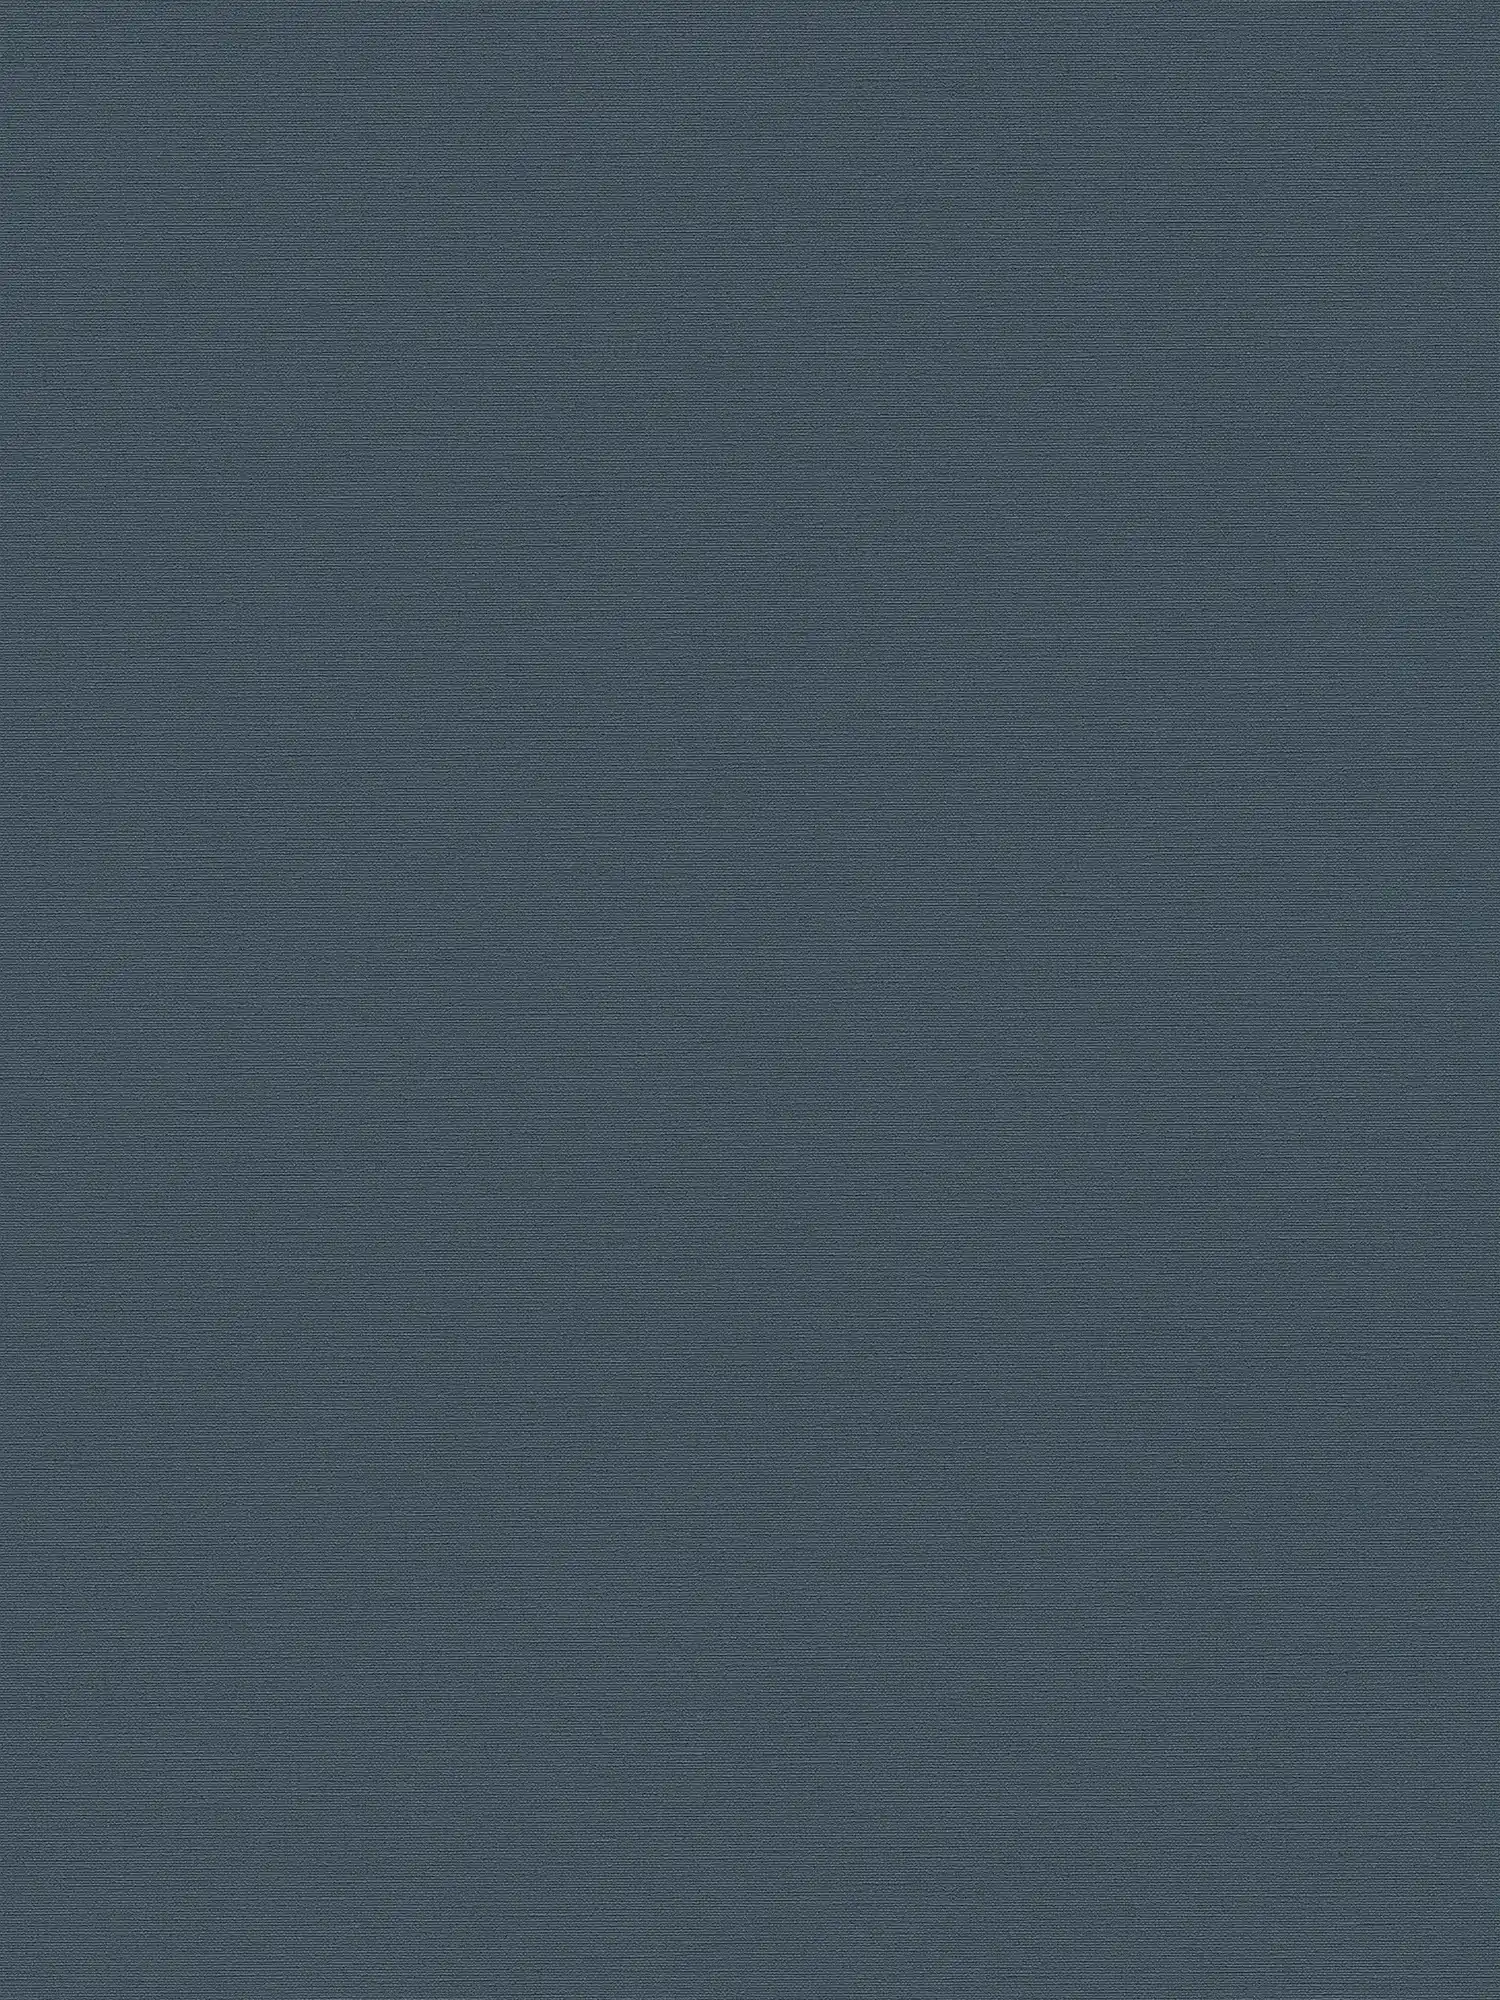 Dark plain with light structure - Blue
